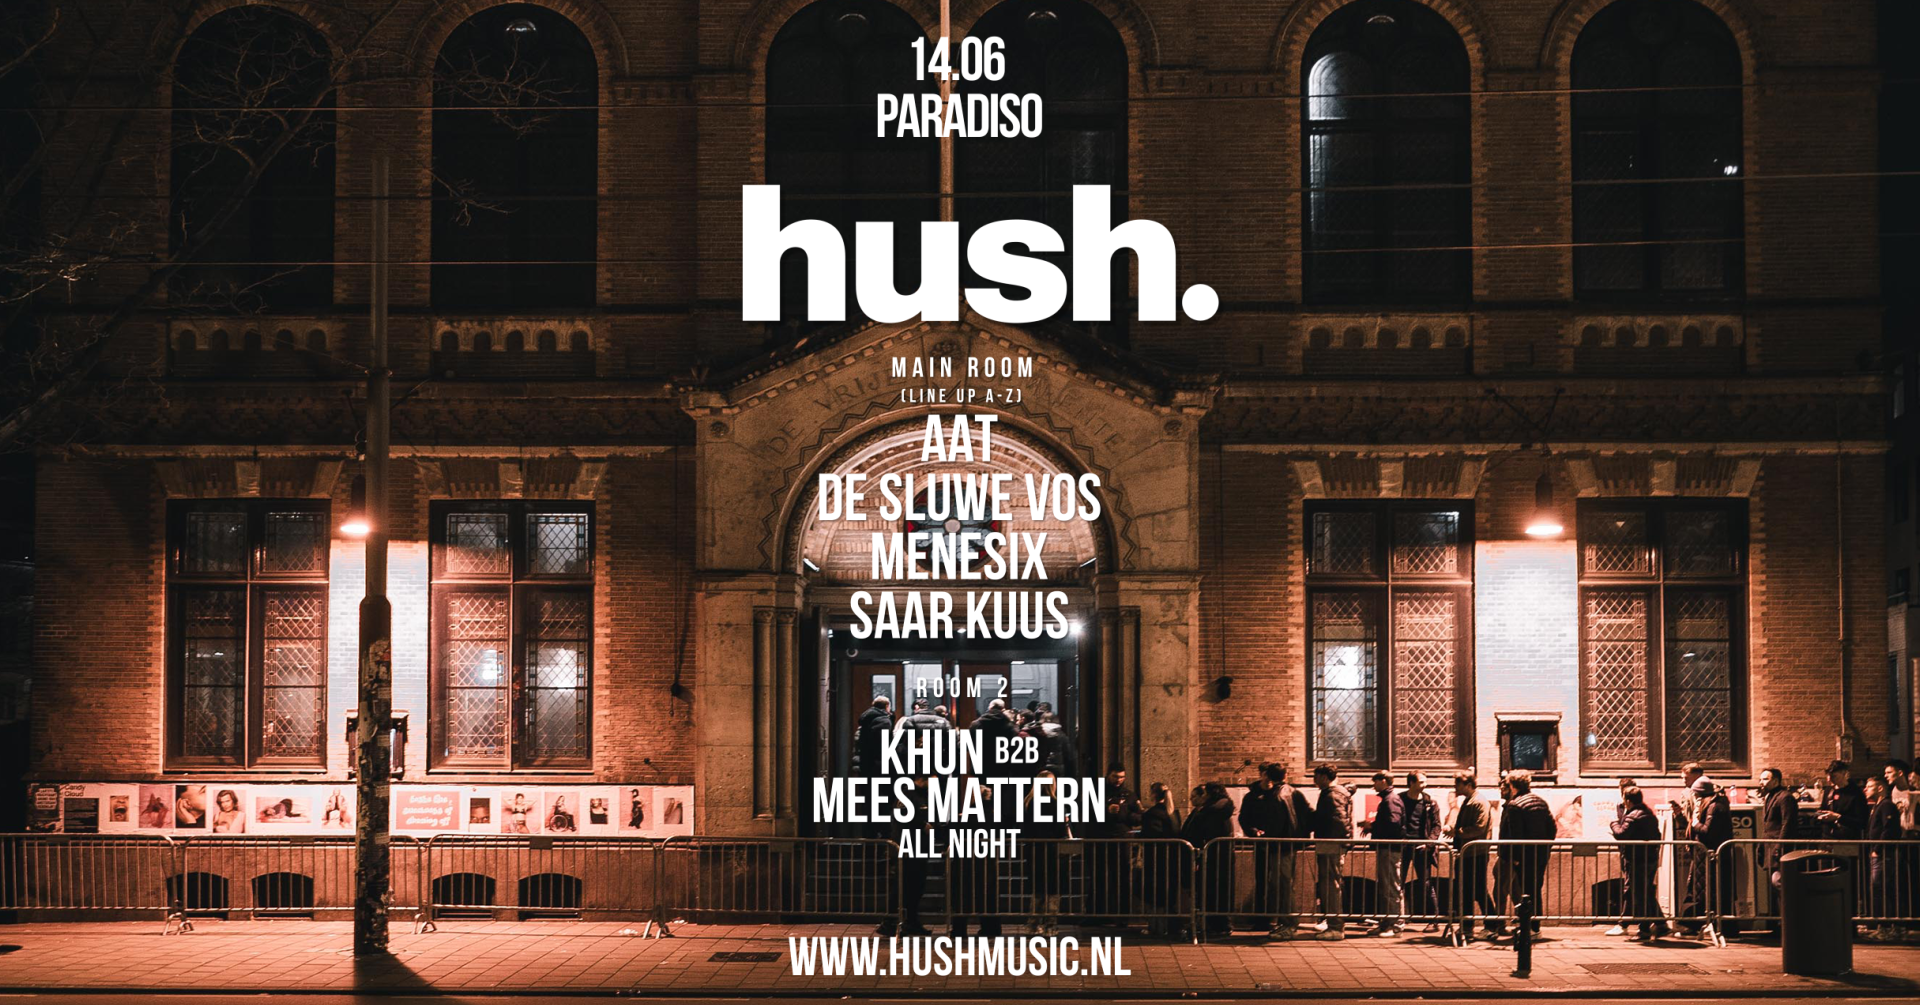 Hush. with De Sluwe Vos, Menesix - フライヤー表